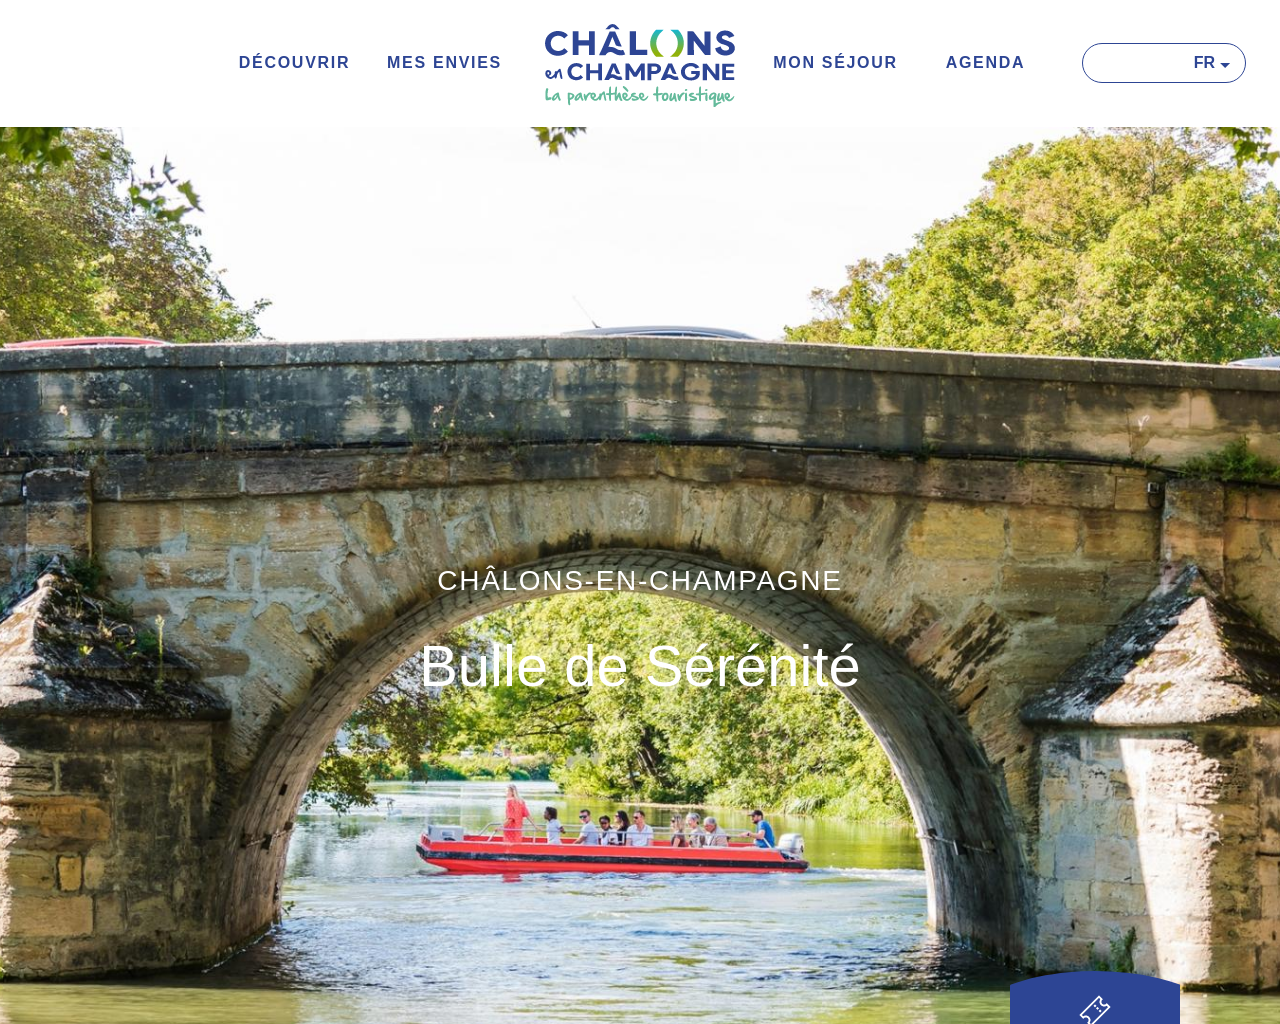 www.chalons-tourisme.com